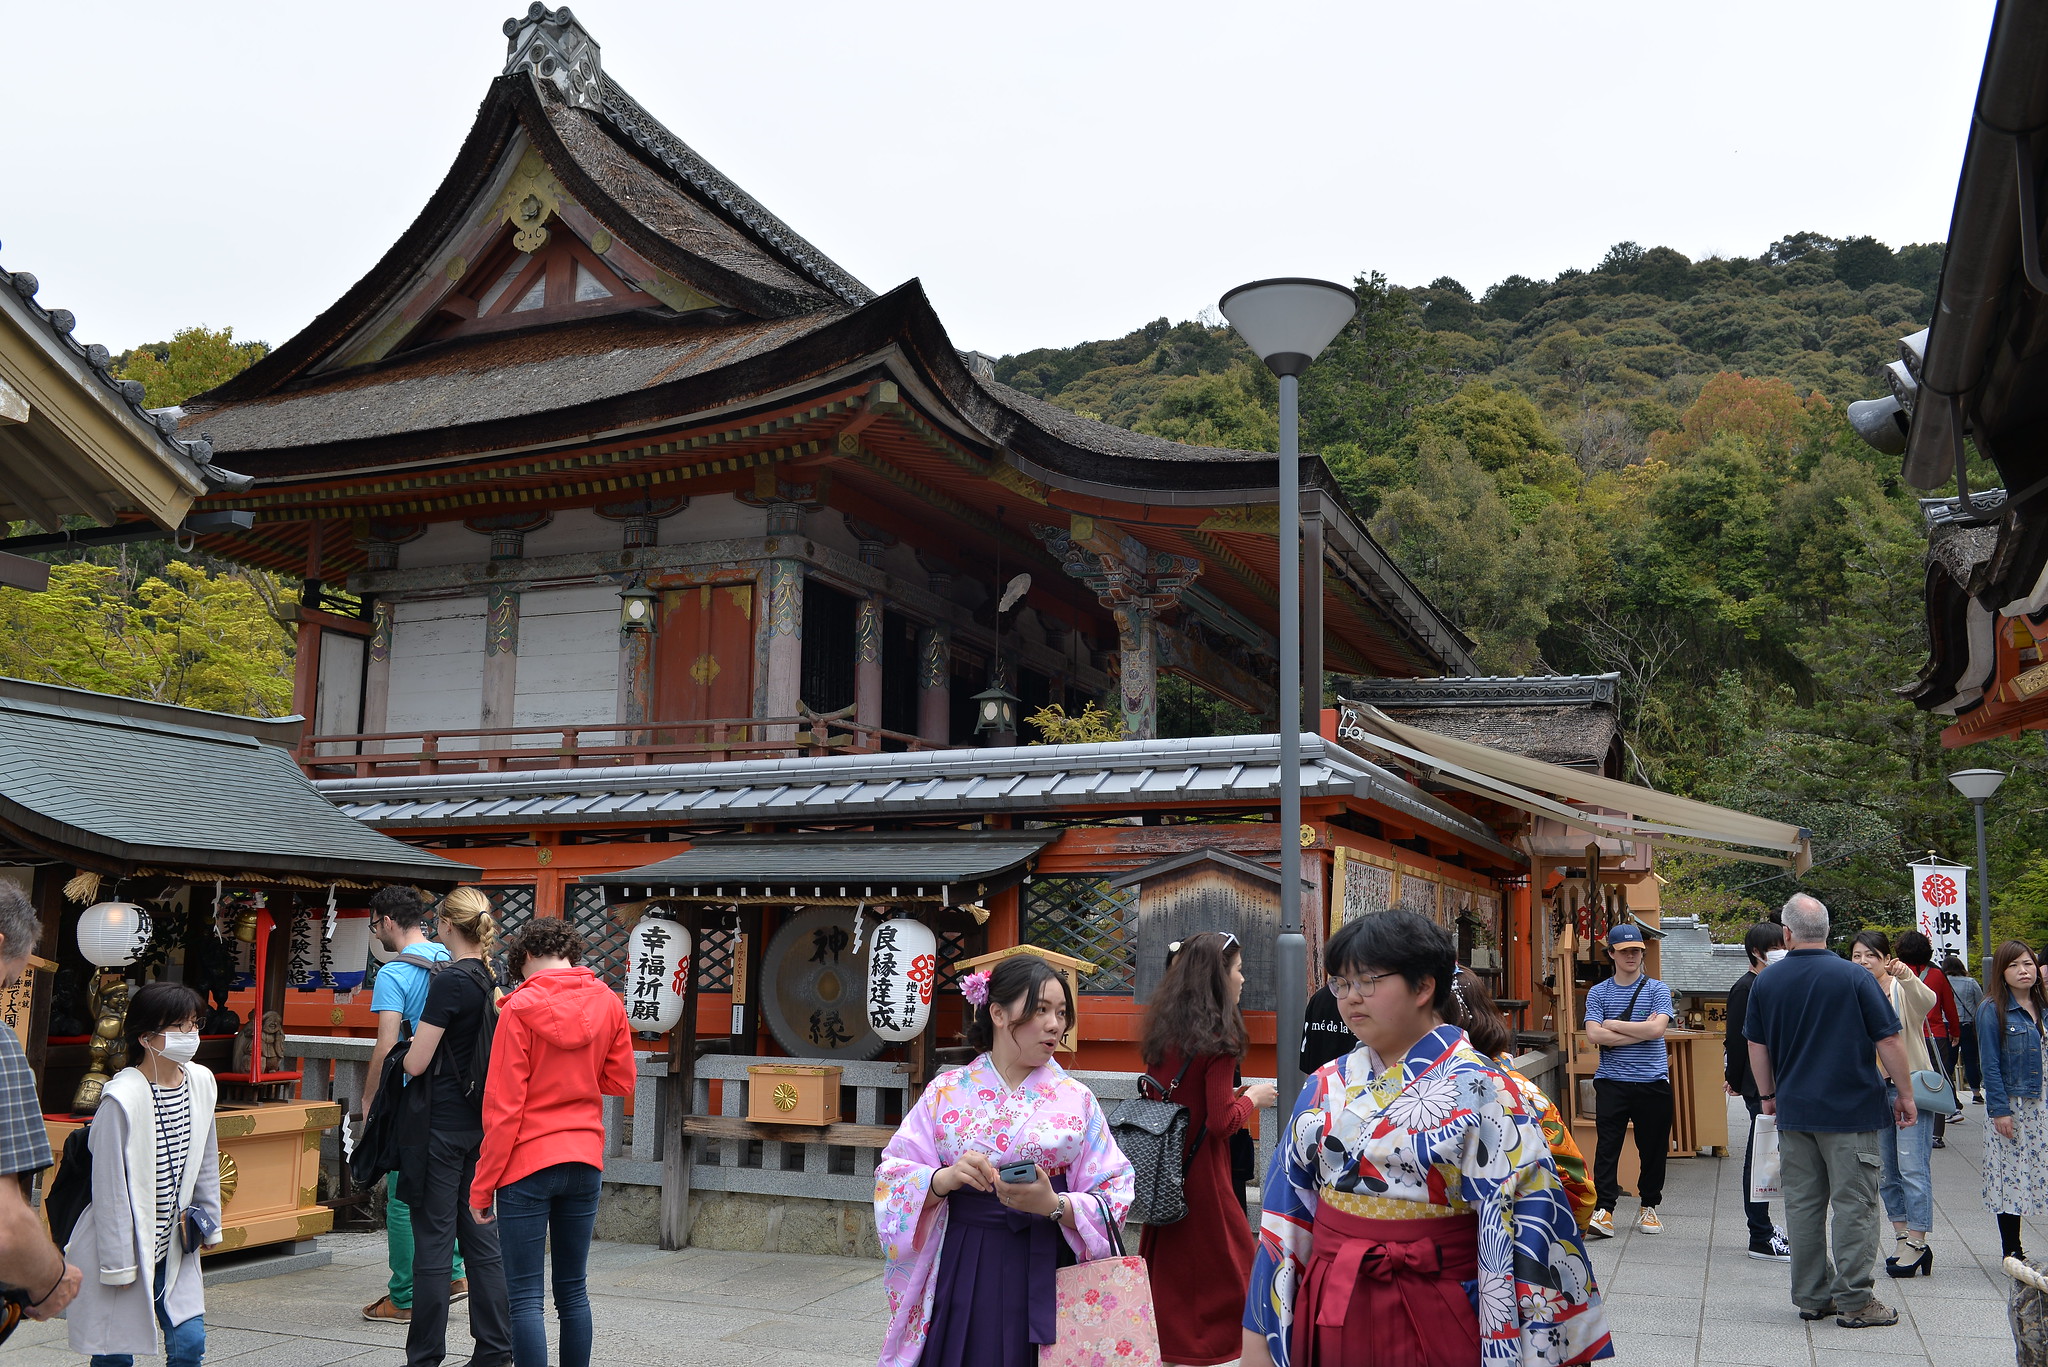 Tourists at Kiyomizu-dera. Tourism to Japan is continuing to boom.